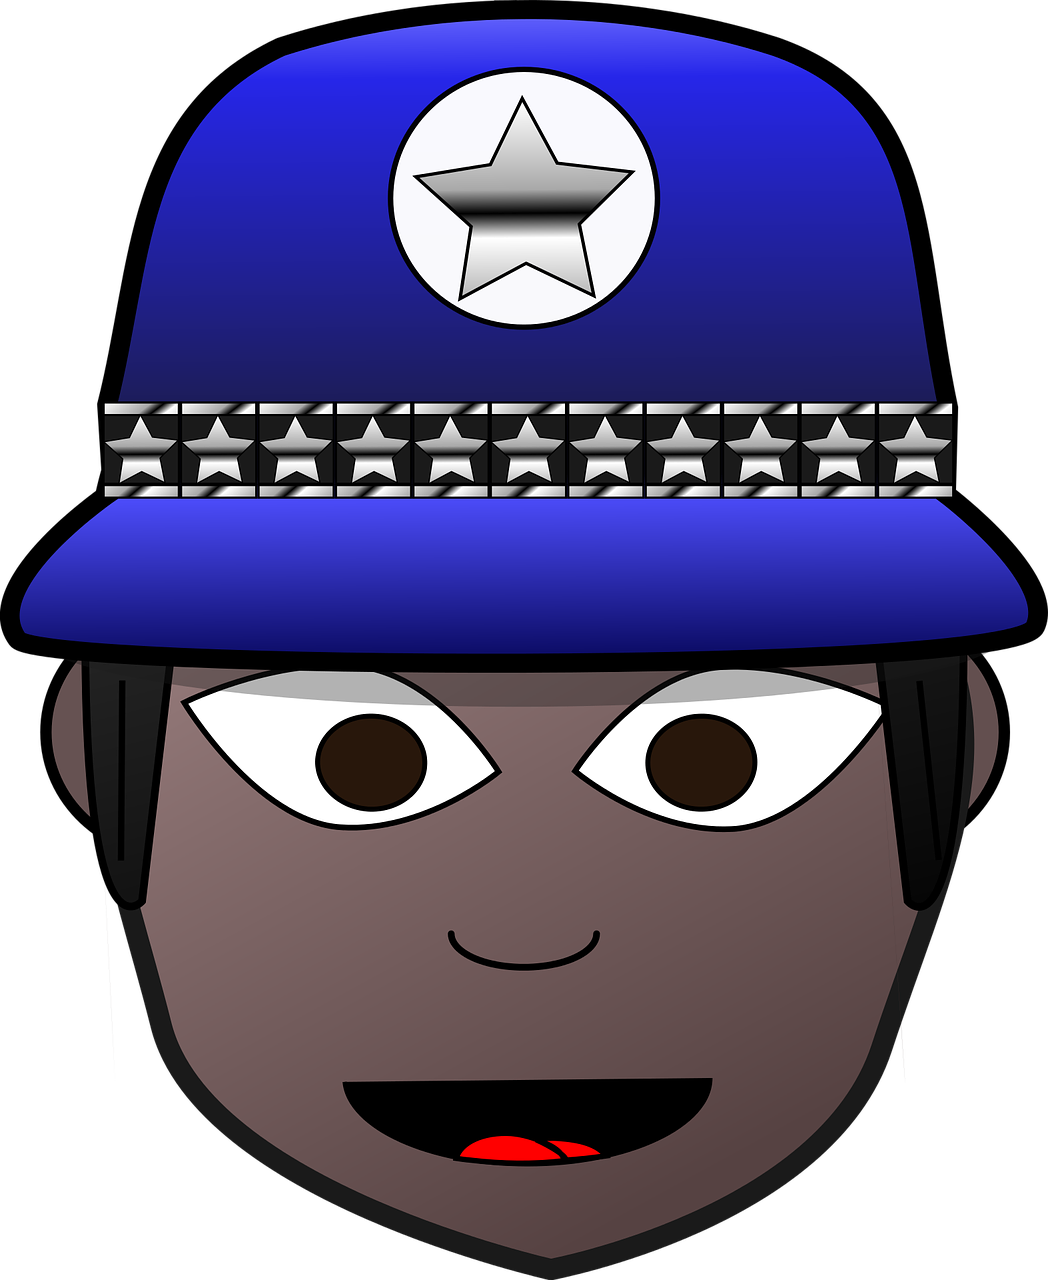 A Cartoon Of A Boy Wearing A Blue Hat